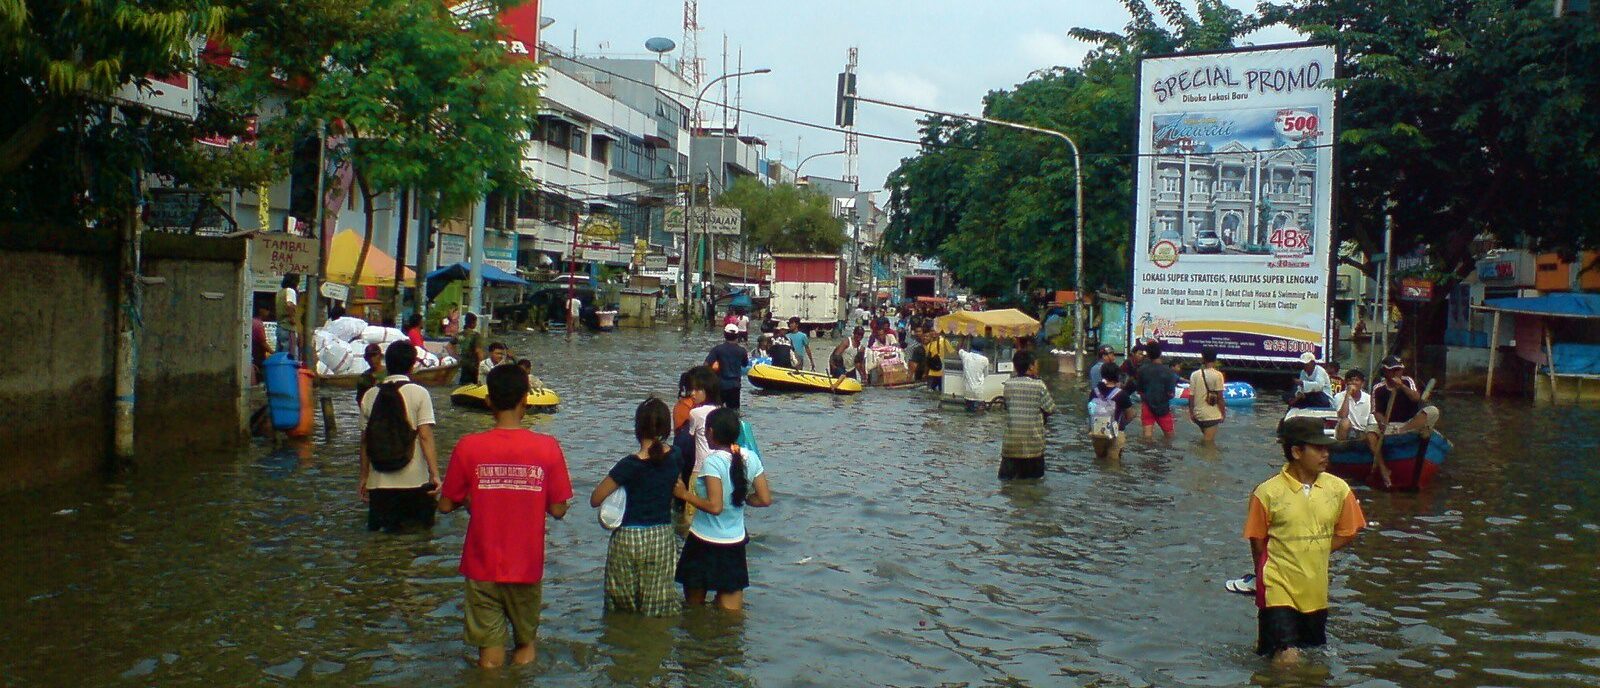 Le cyclone Seroja a provoqué des inondations massives en Indonésie | (photo: inondations à Jakarta en 2007) © Charles Wiriawan/Flickr/CC BY-NC-ND 2.0